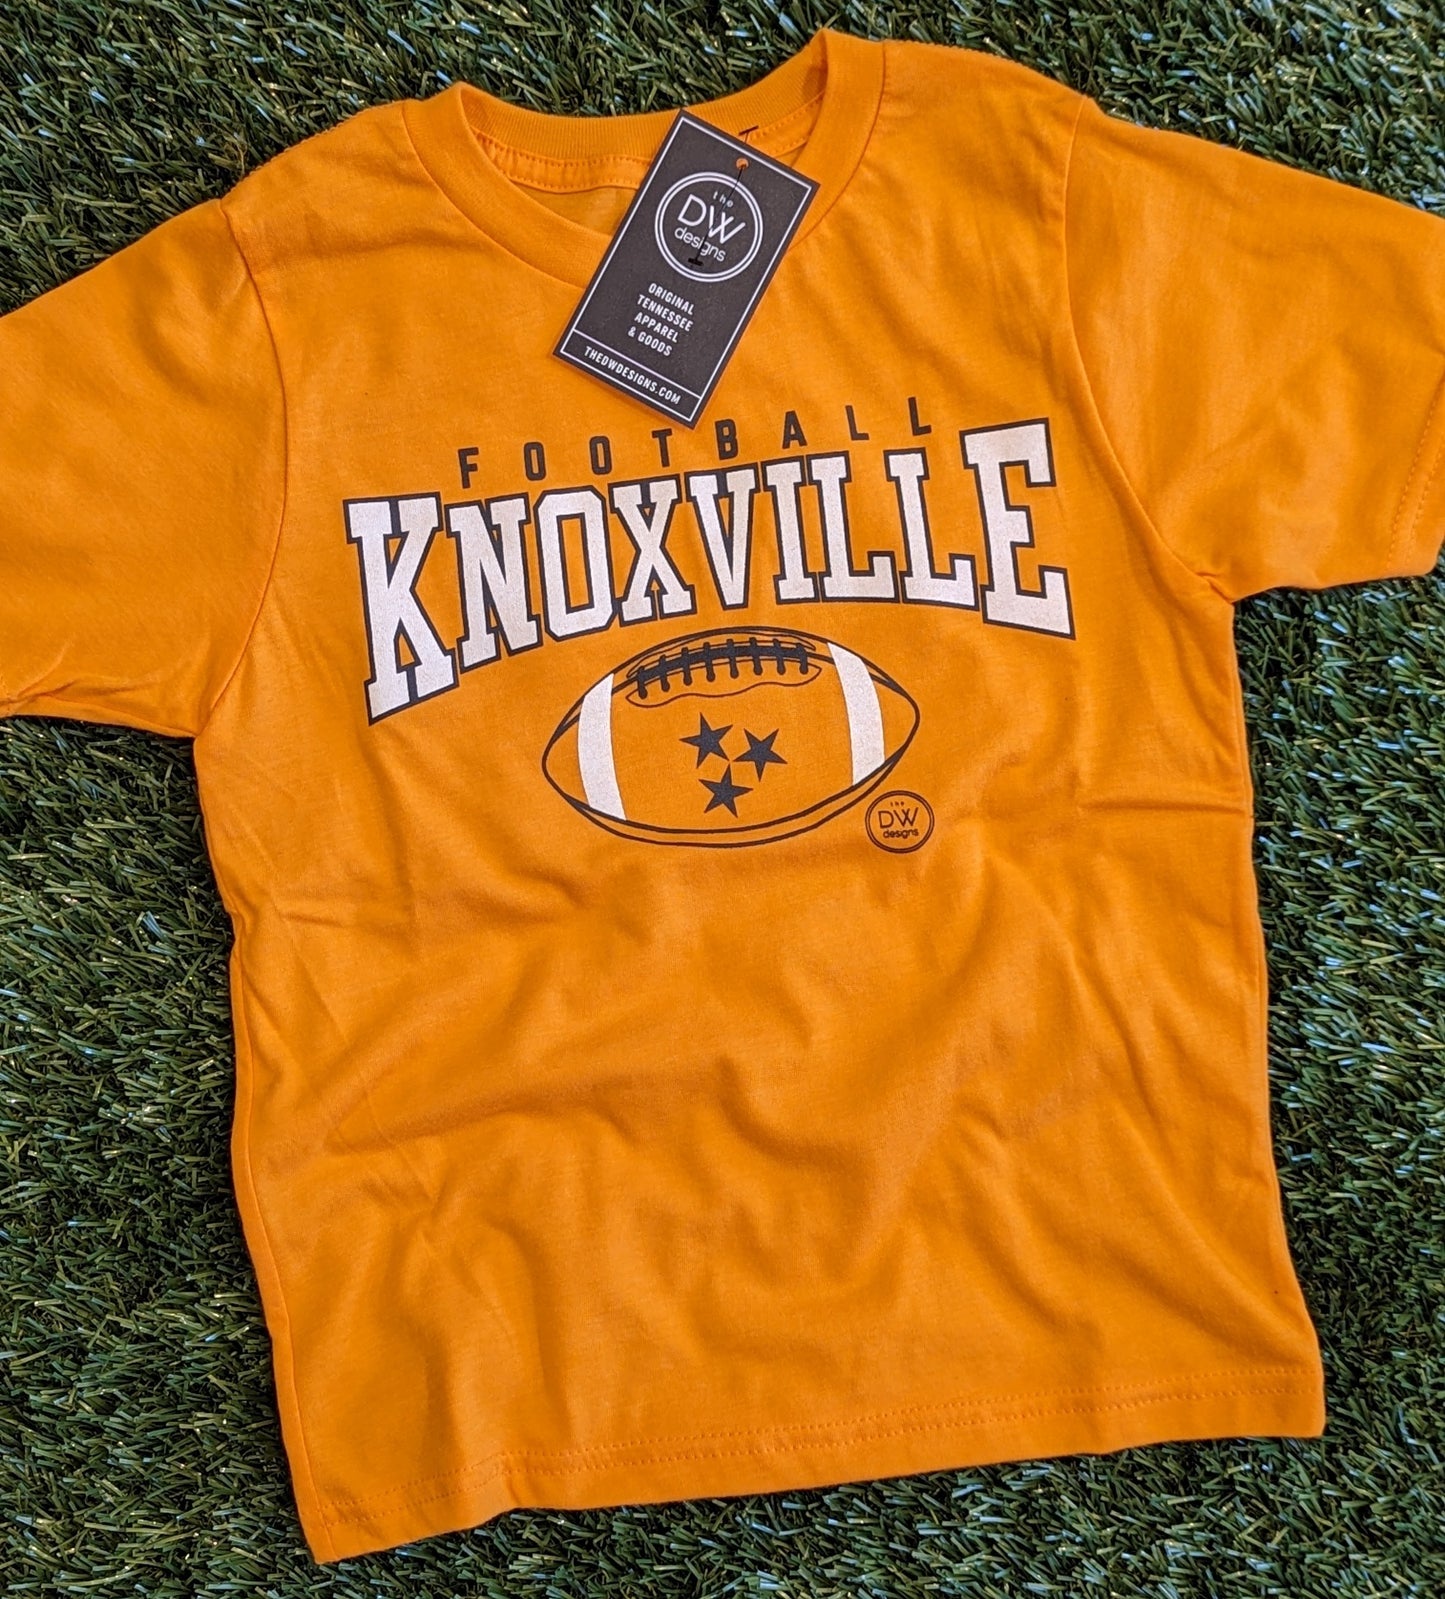 The Knoxville Football Kids' Tee - Orange